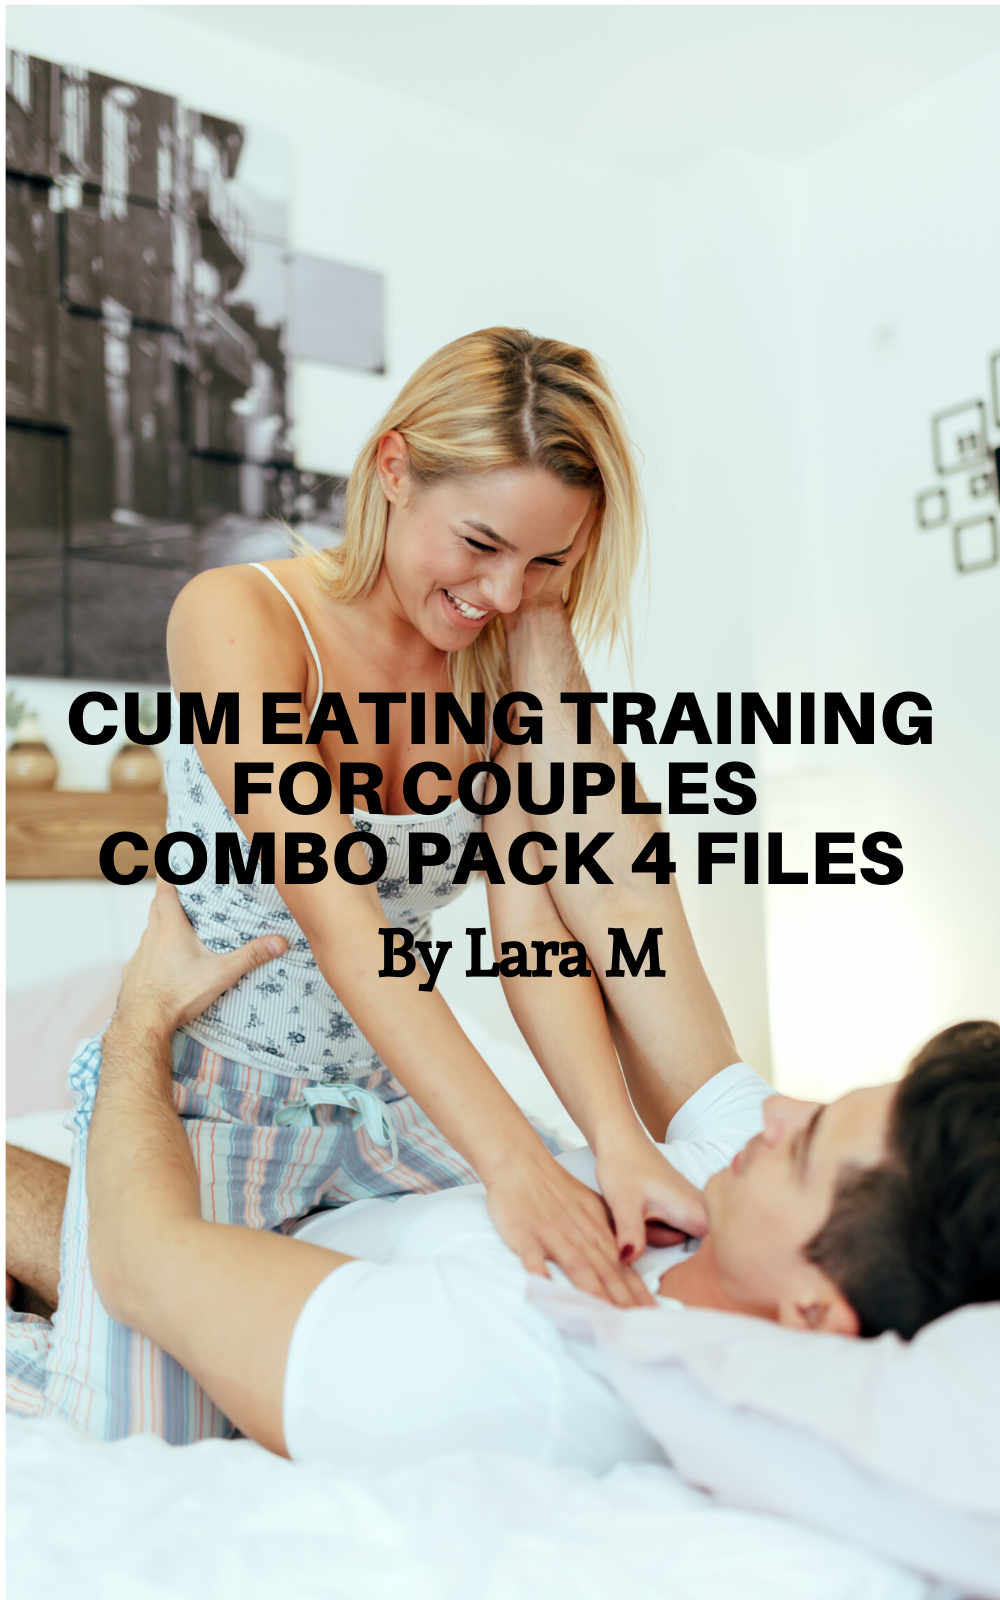 training cuckold to eat cum